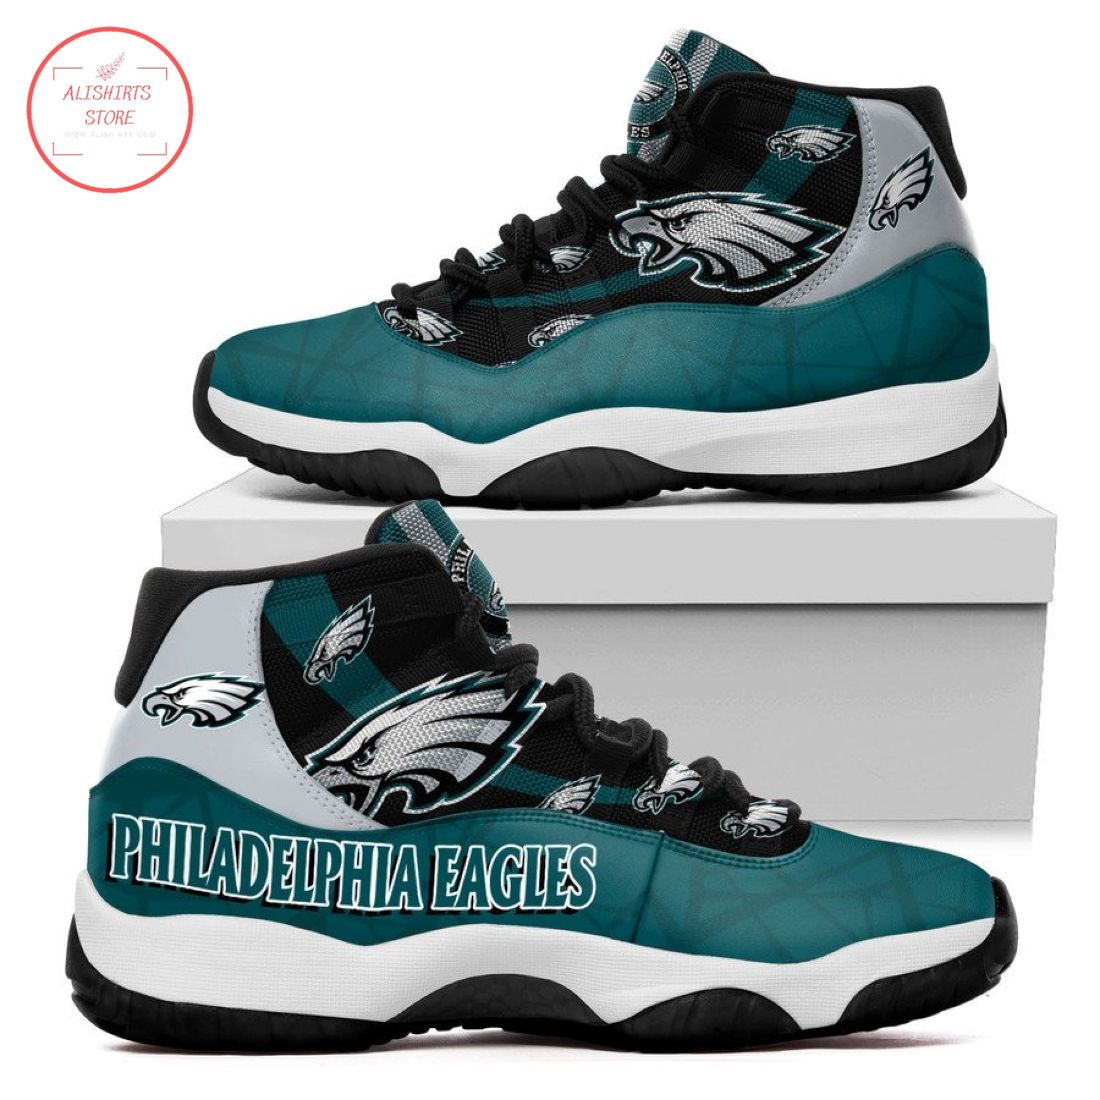 NFL Philadelphia Eagles New Air Jordan 11 Sneakers Shoes